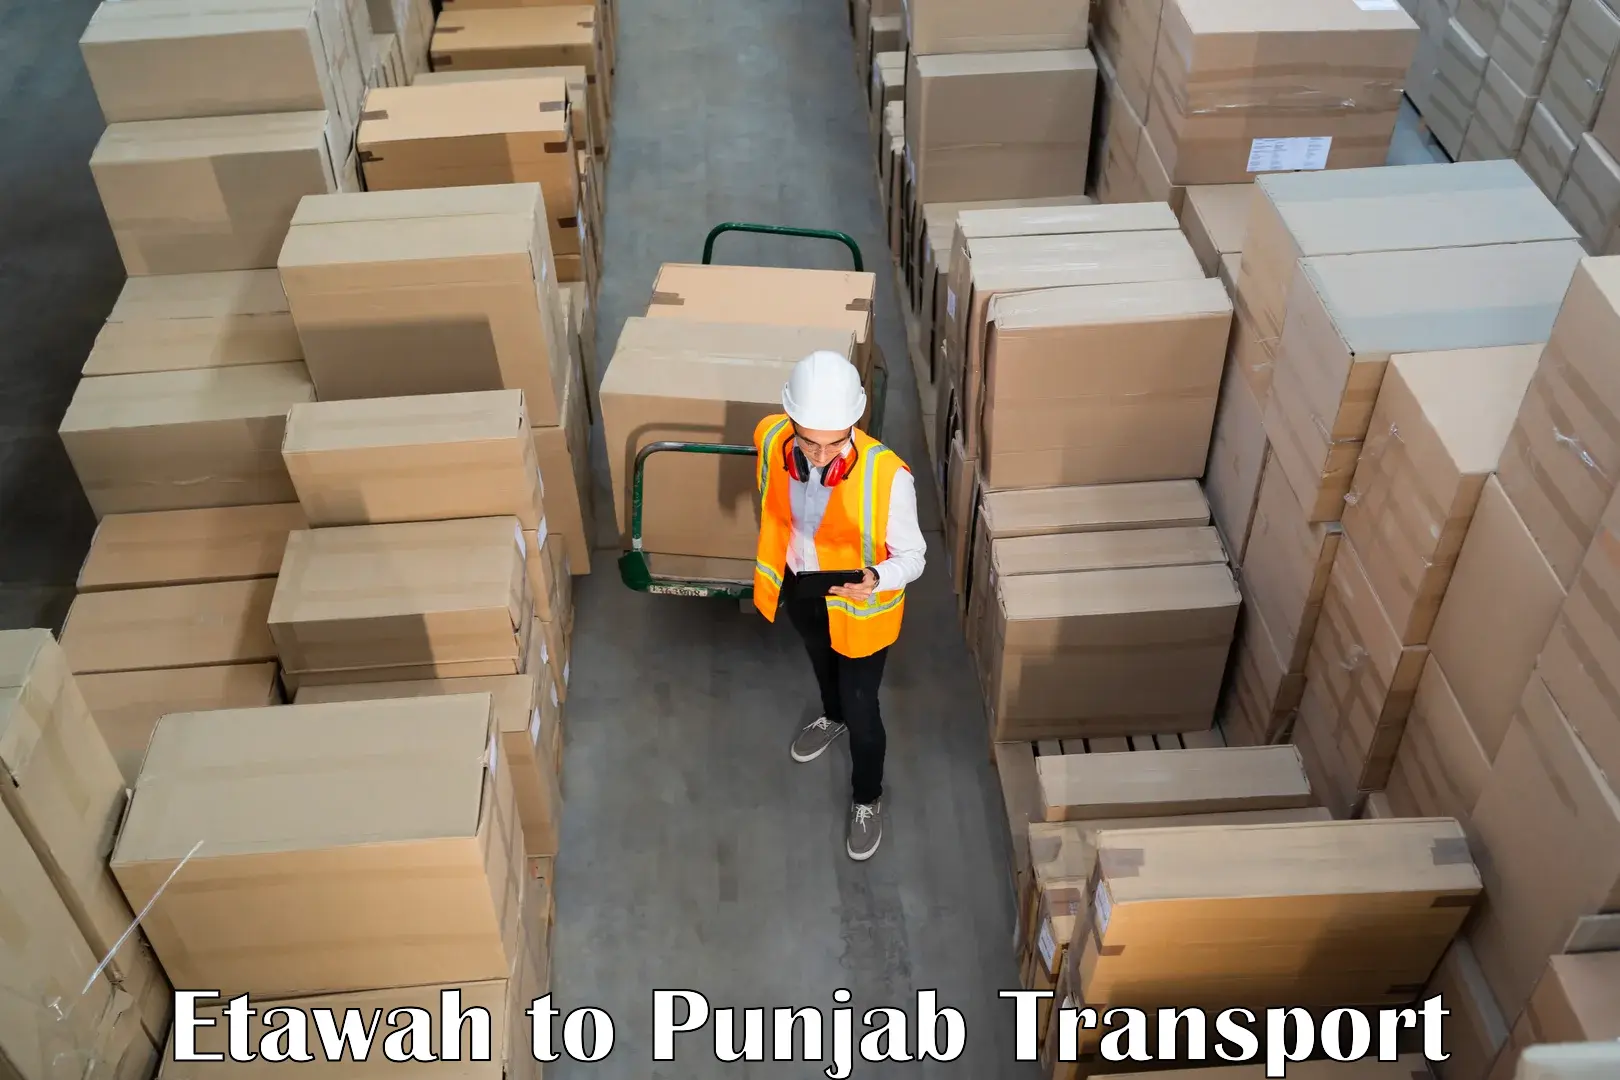 Delivery service Etawah to Zirakpur